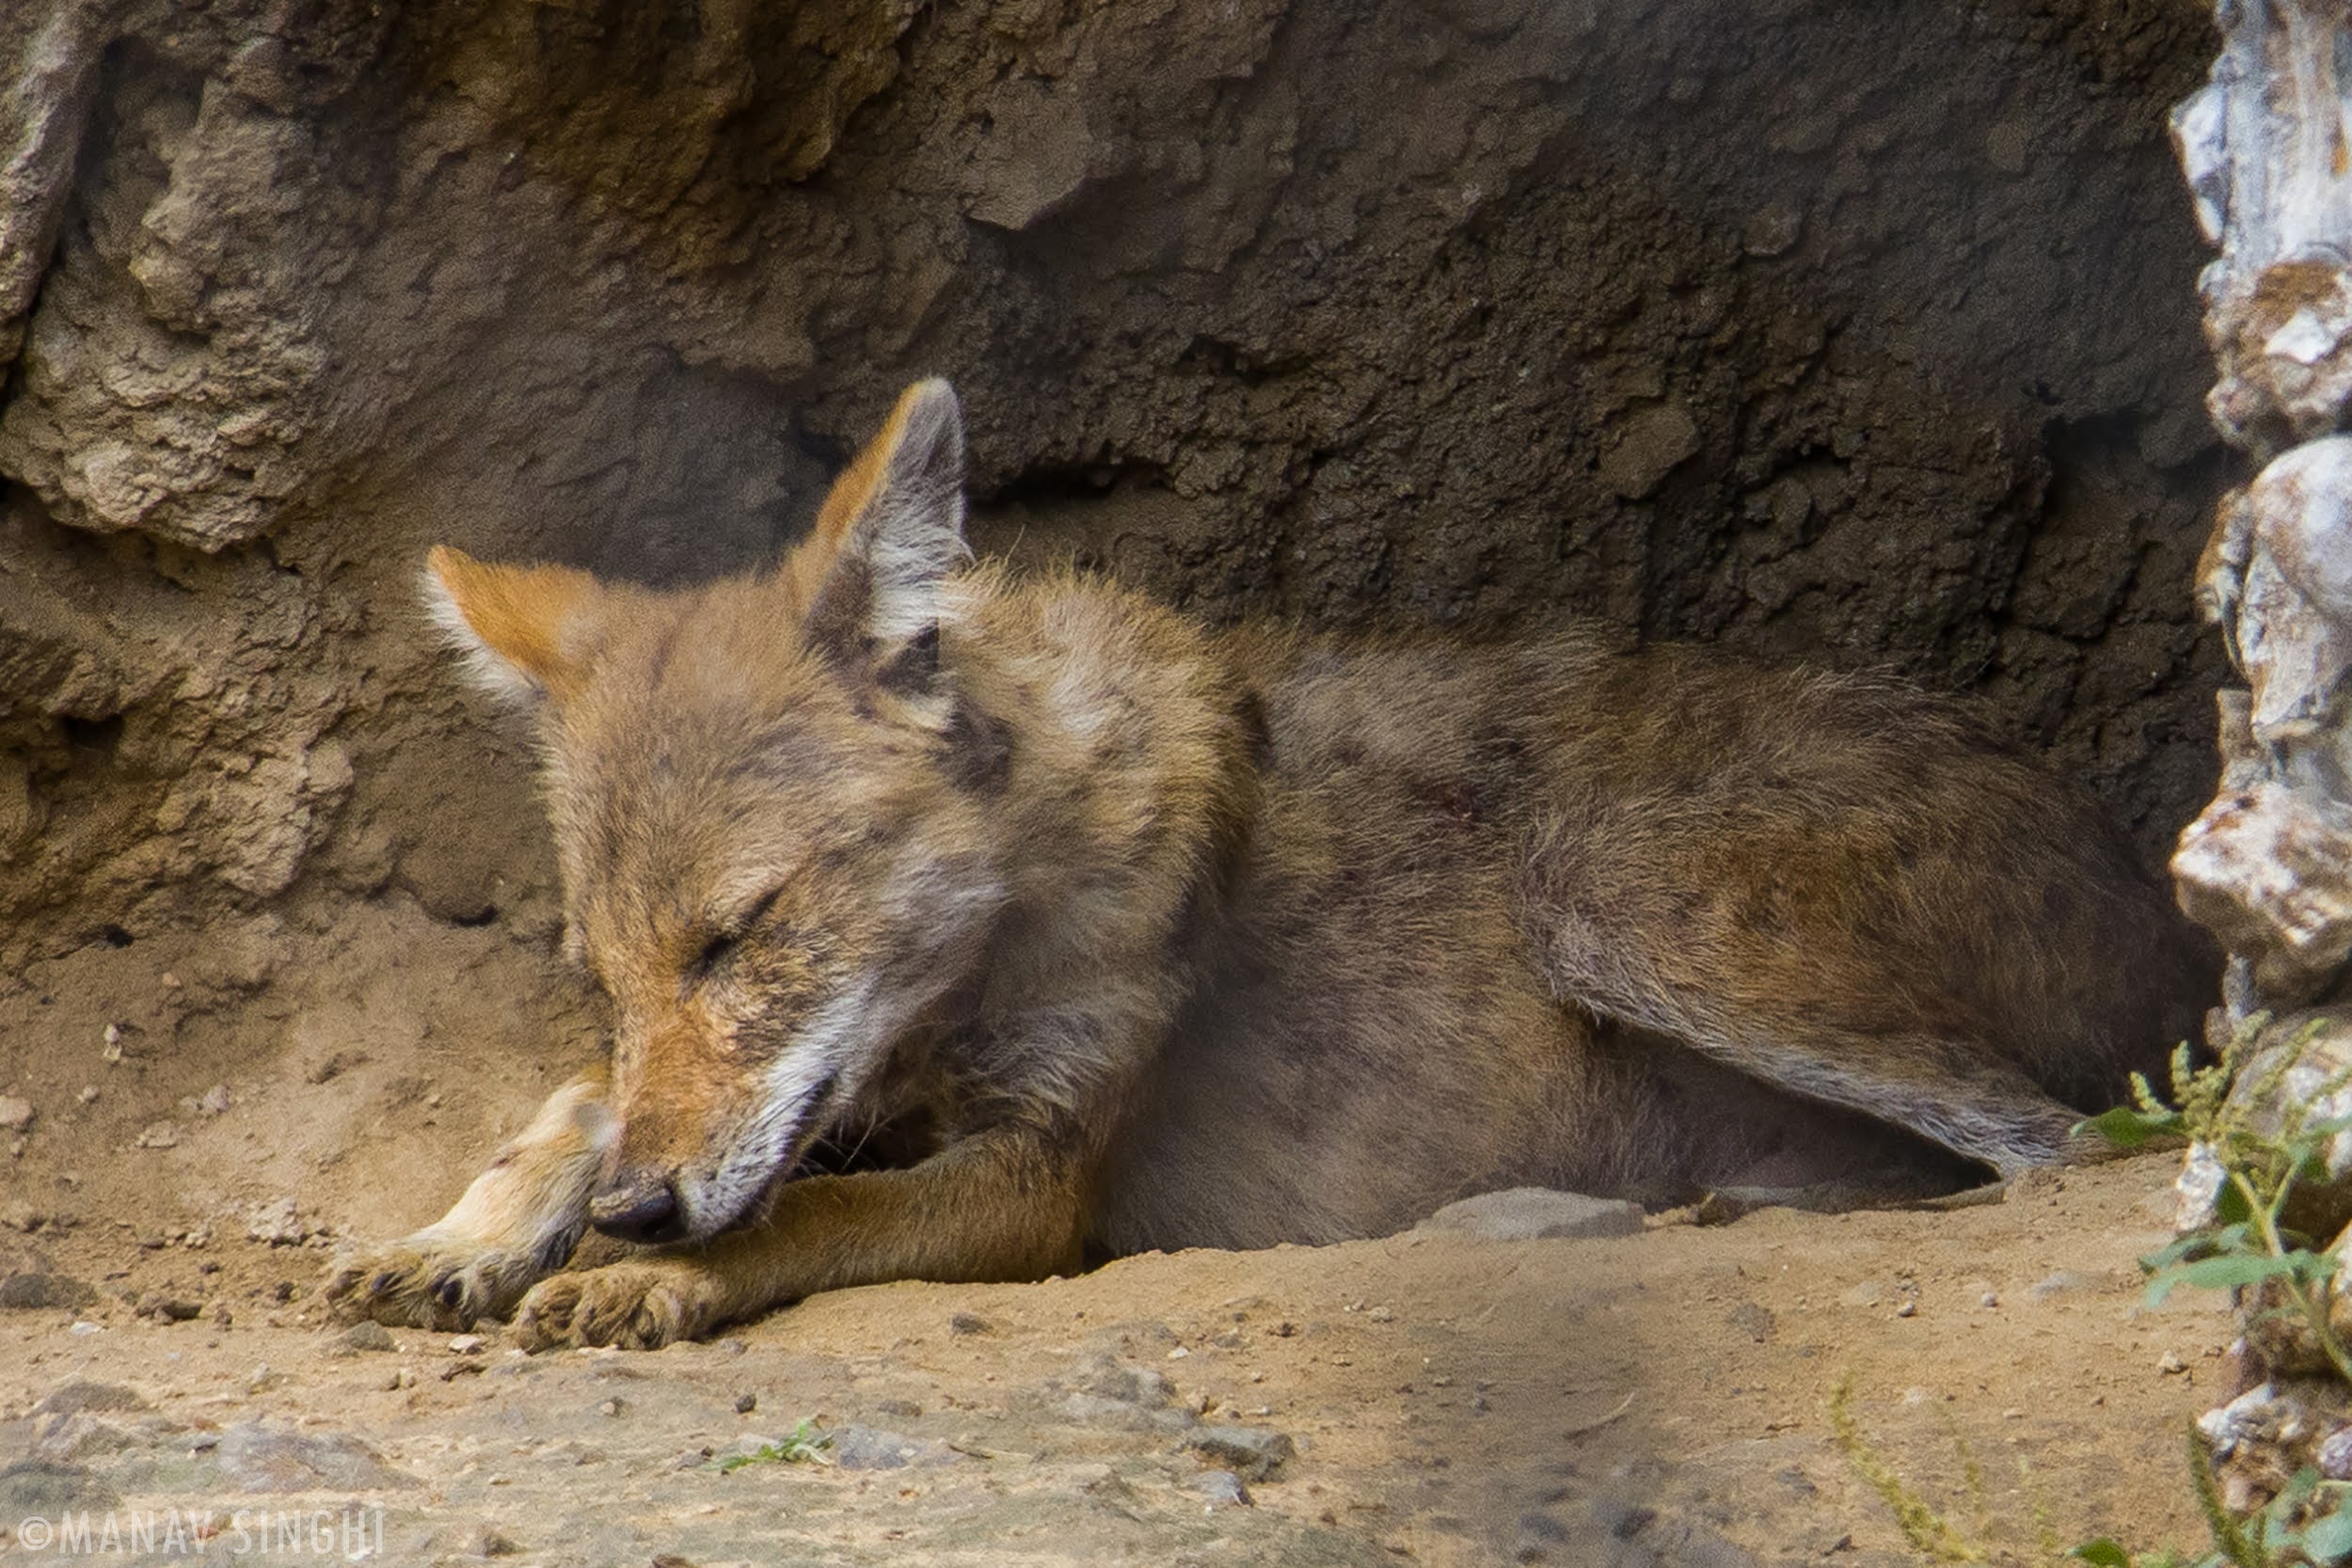 A sleeping Fox.